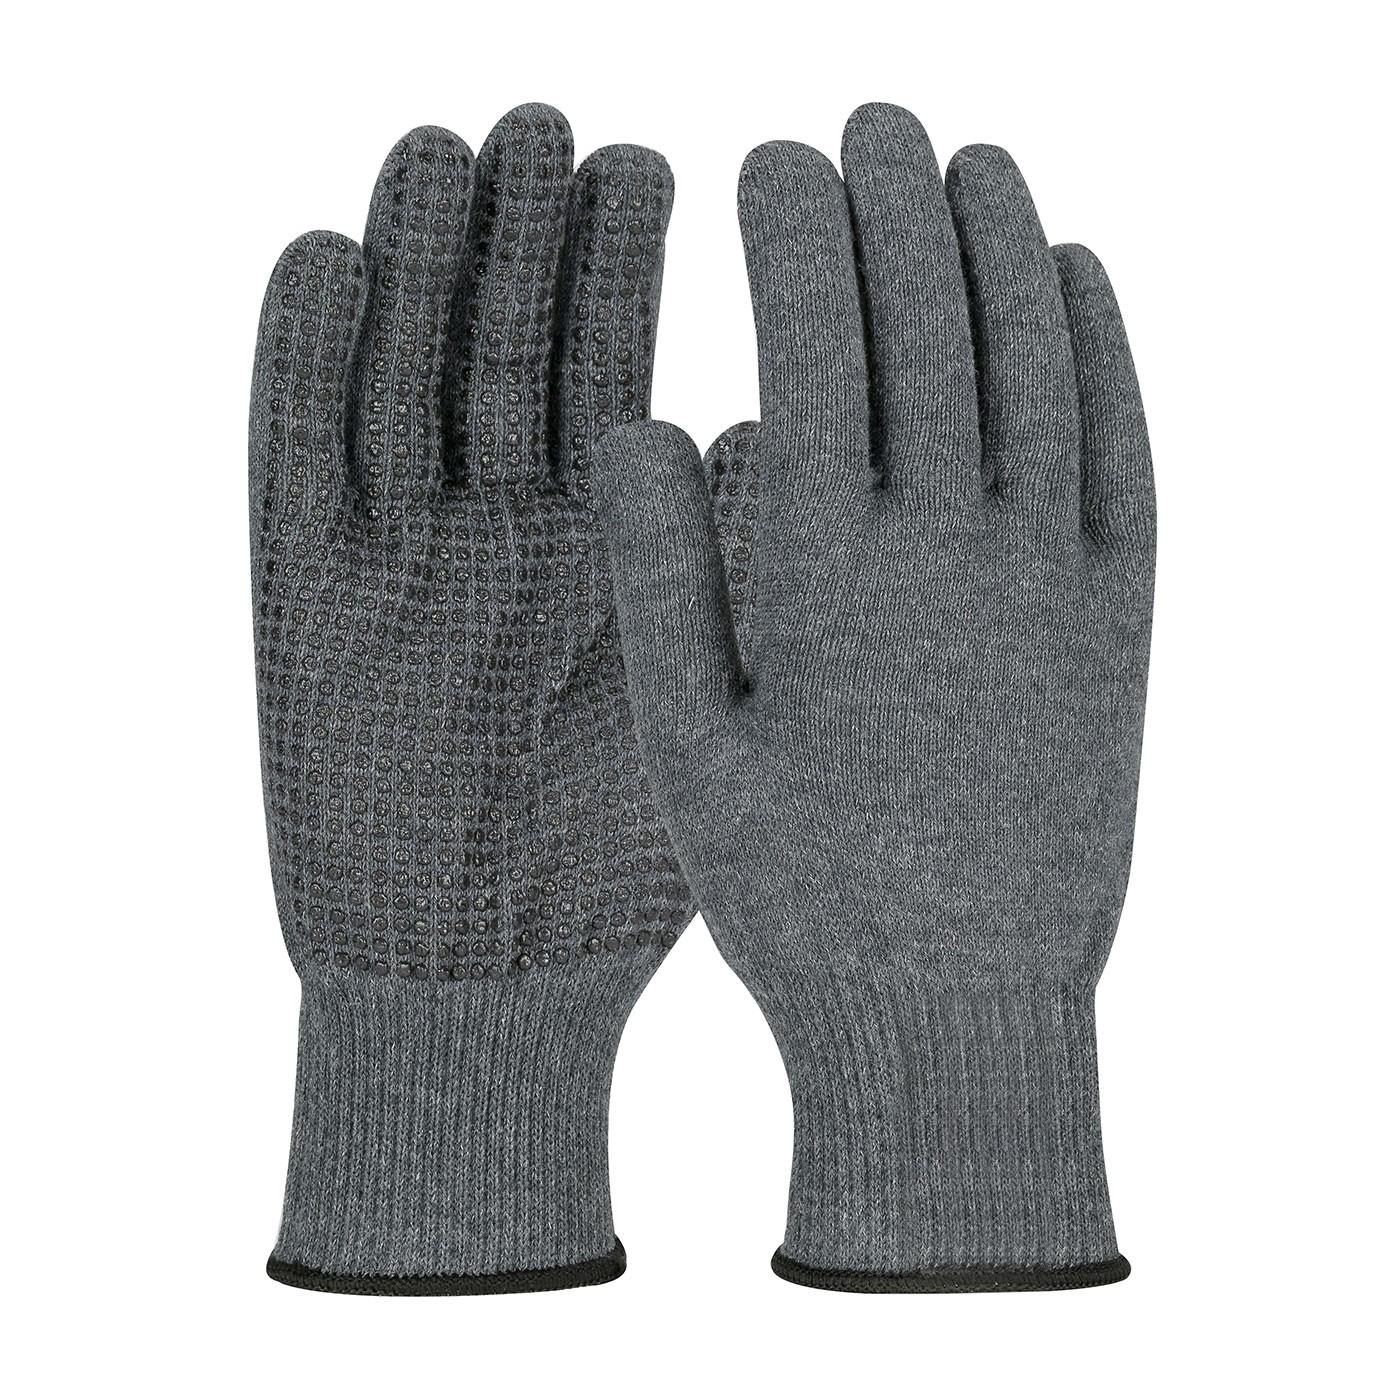 Kut Gard® Seamless Knit ACP / Kevlar® Blended Glove with PVC Dot Grip - Lightweight  (#08-KAB750PD)